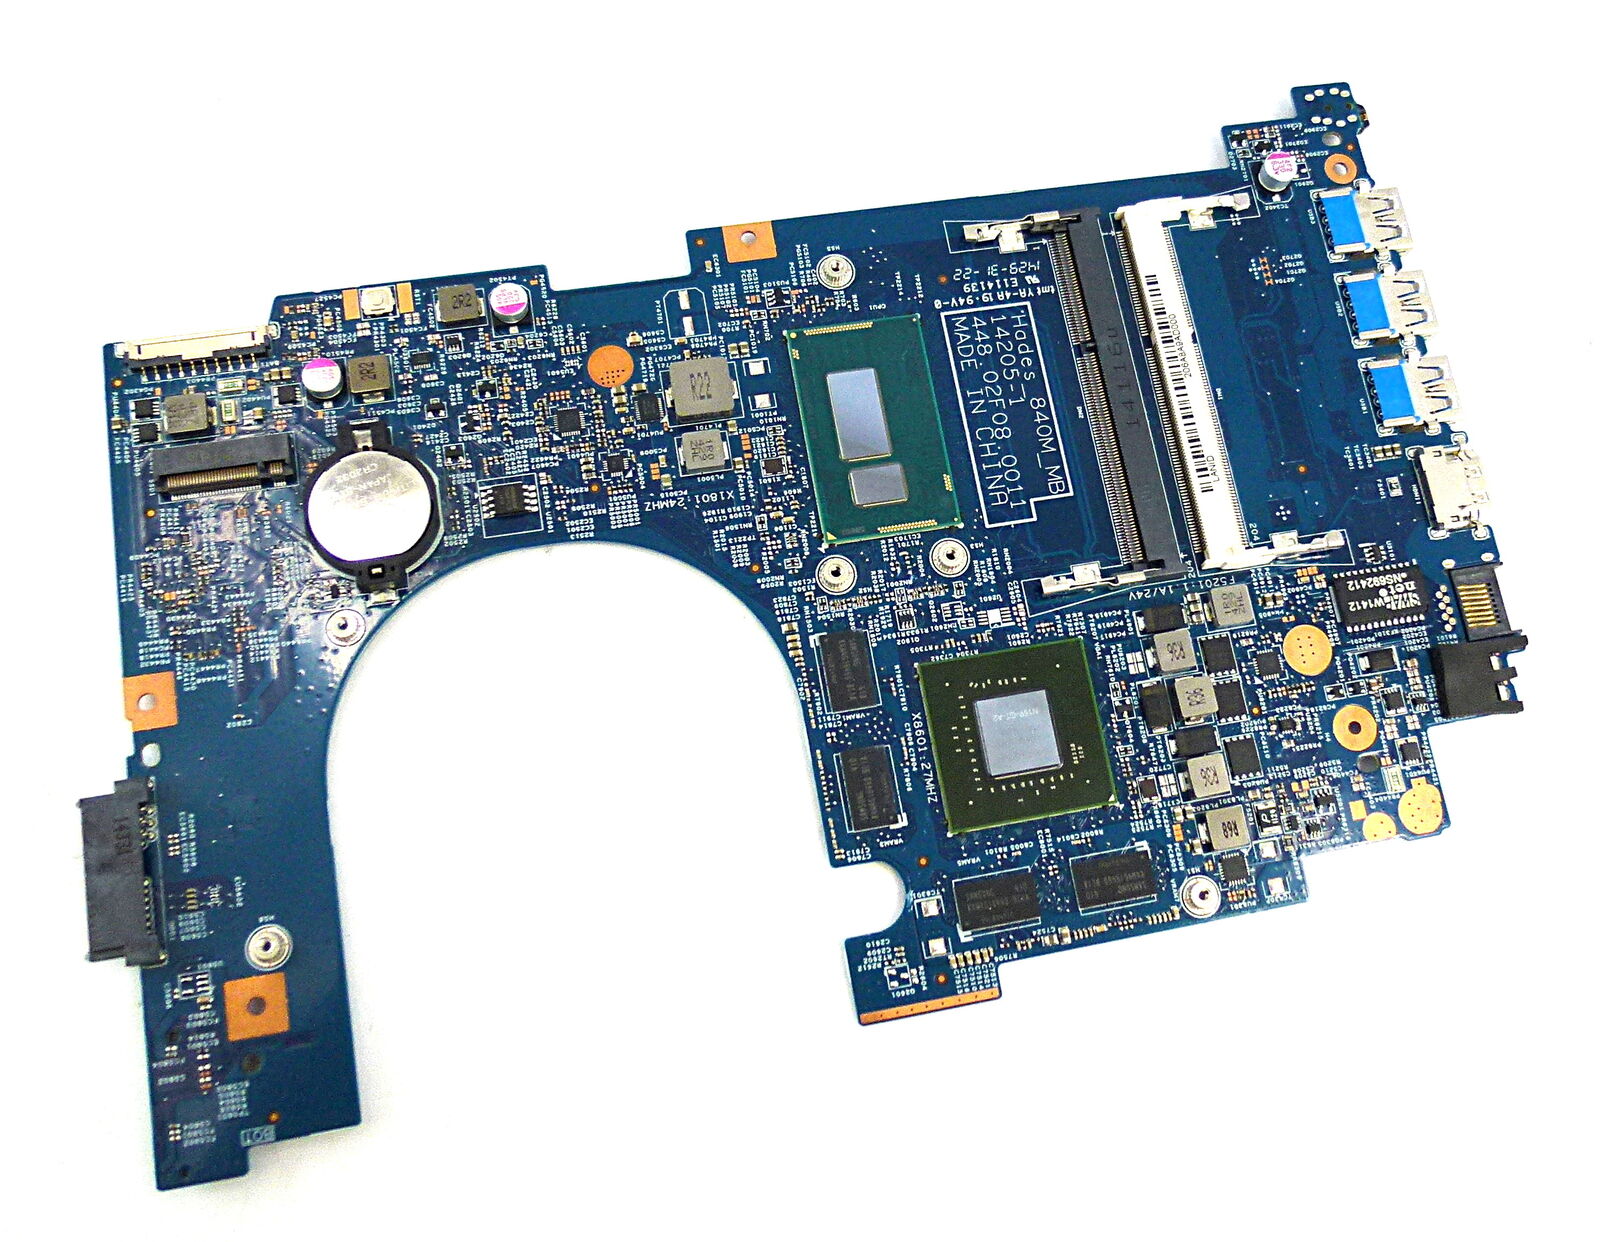 NEW Acer NB.MRV11.002 Nitro VN7-571 Motherboard With GTX 850M GPU / i5-4210U CPU